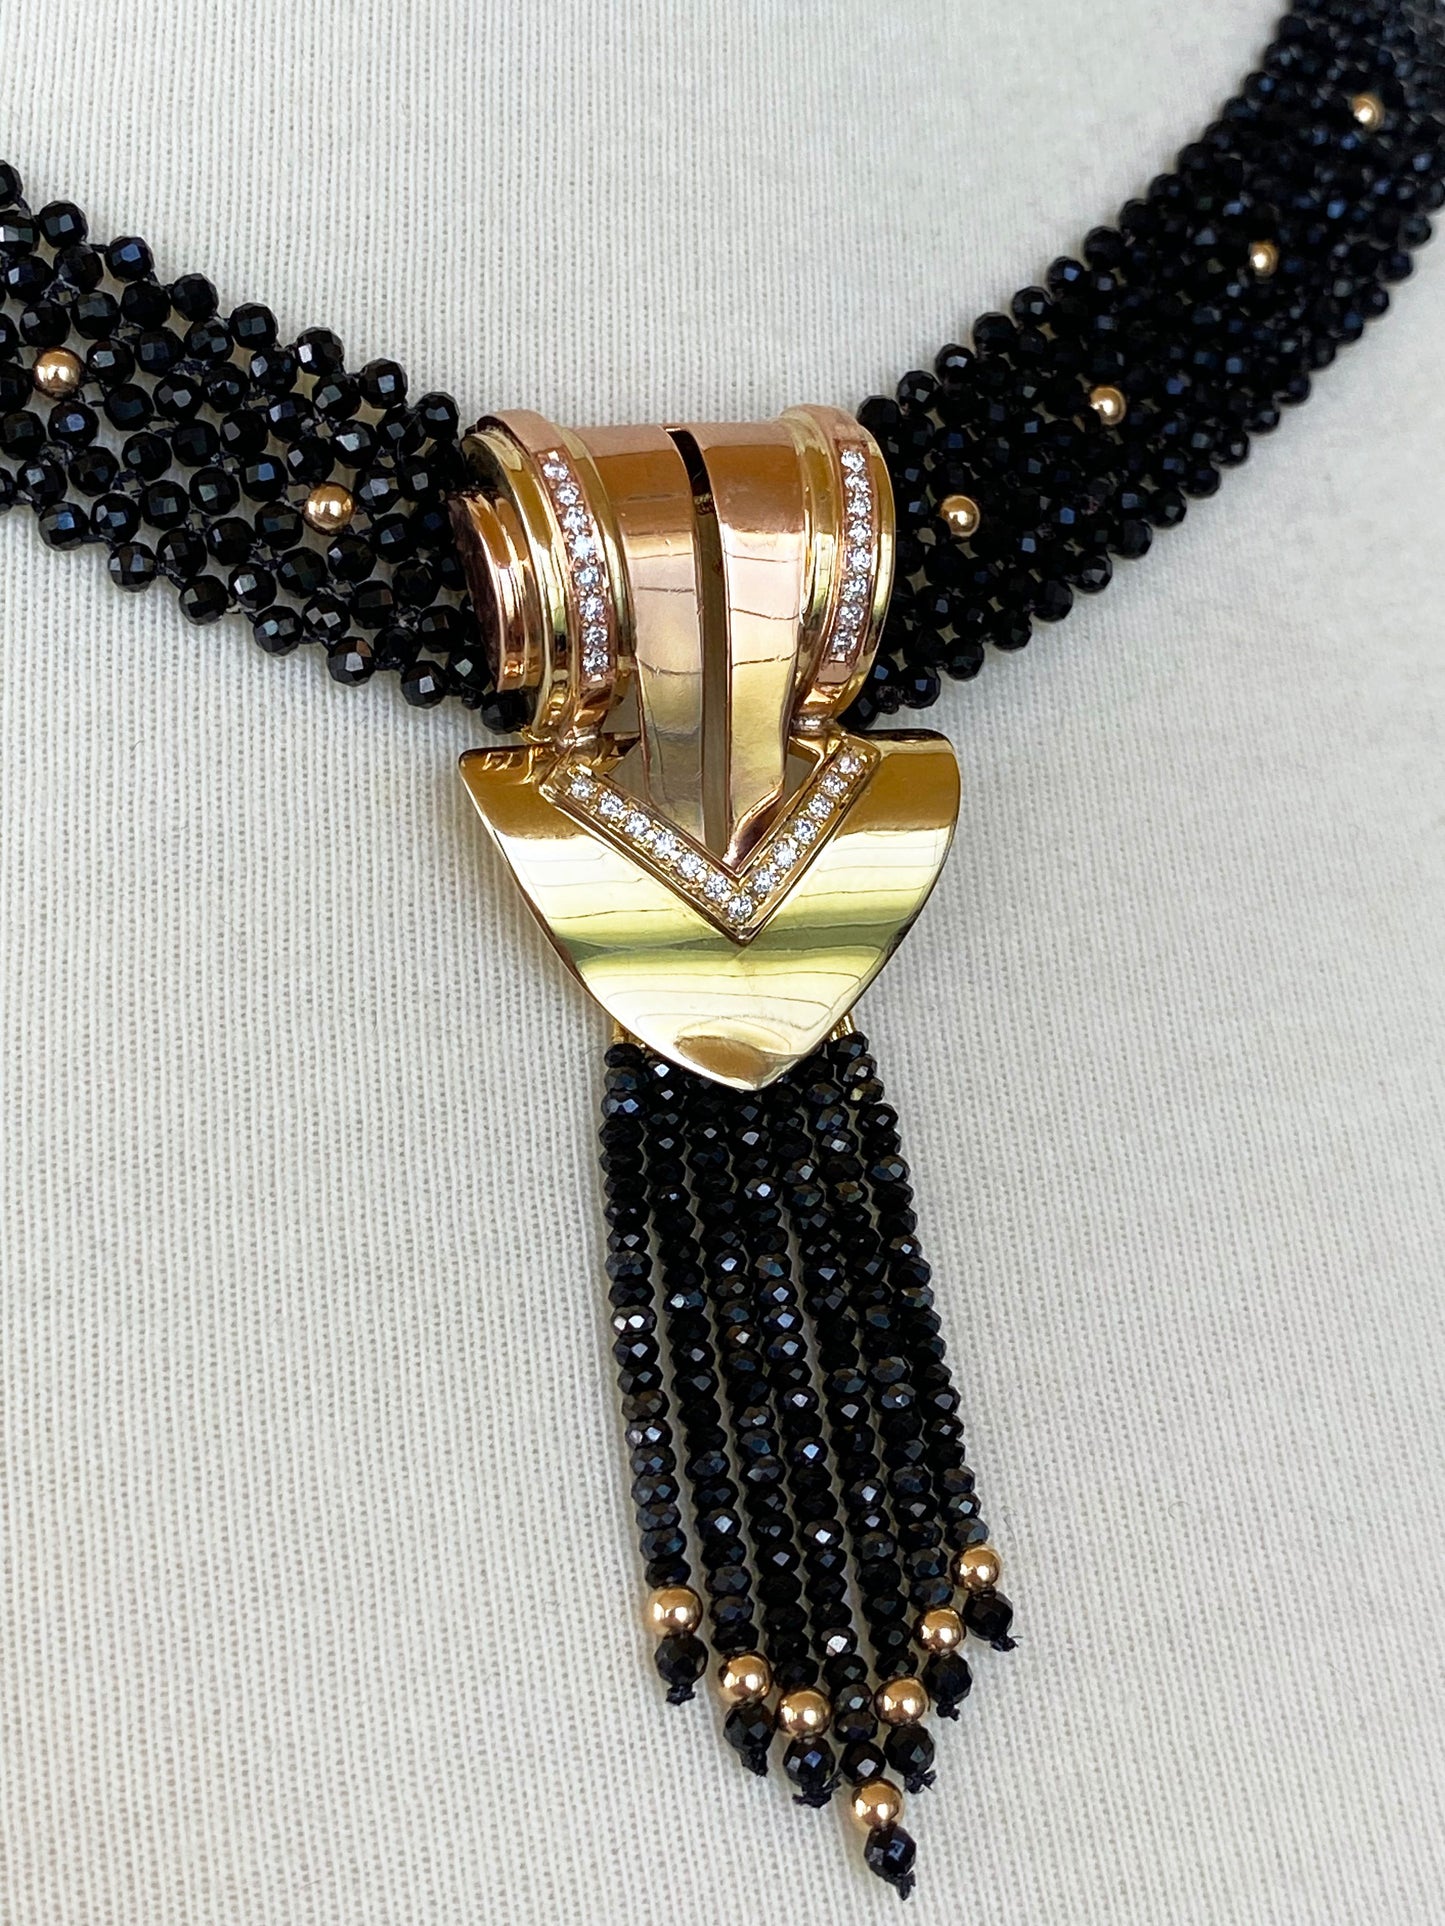 Stunning Diamond, Black Onyx & Solid 14k Yellow Gold Necklace